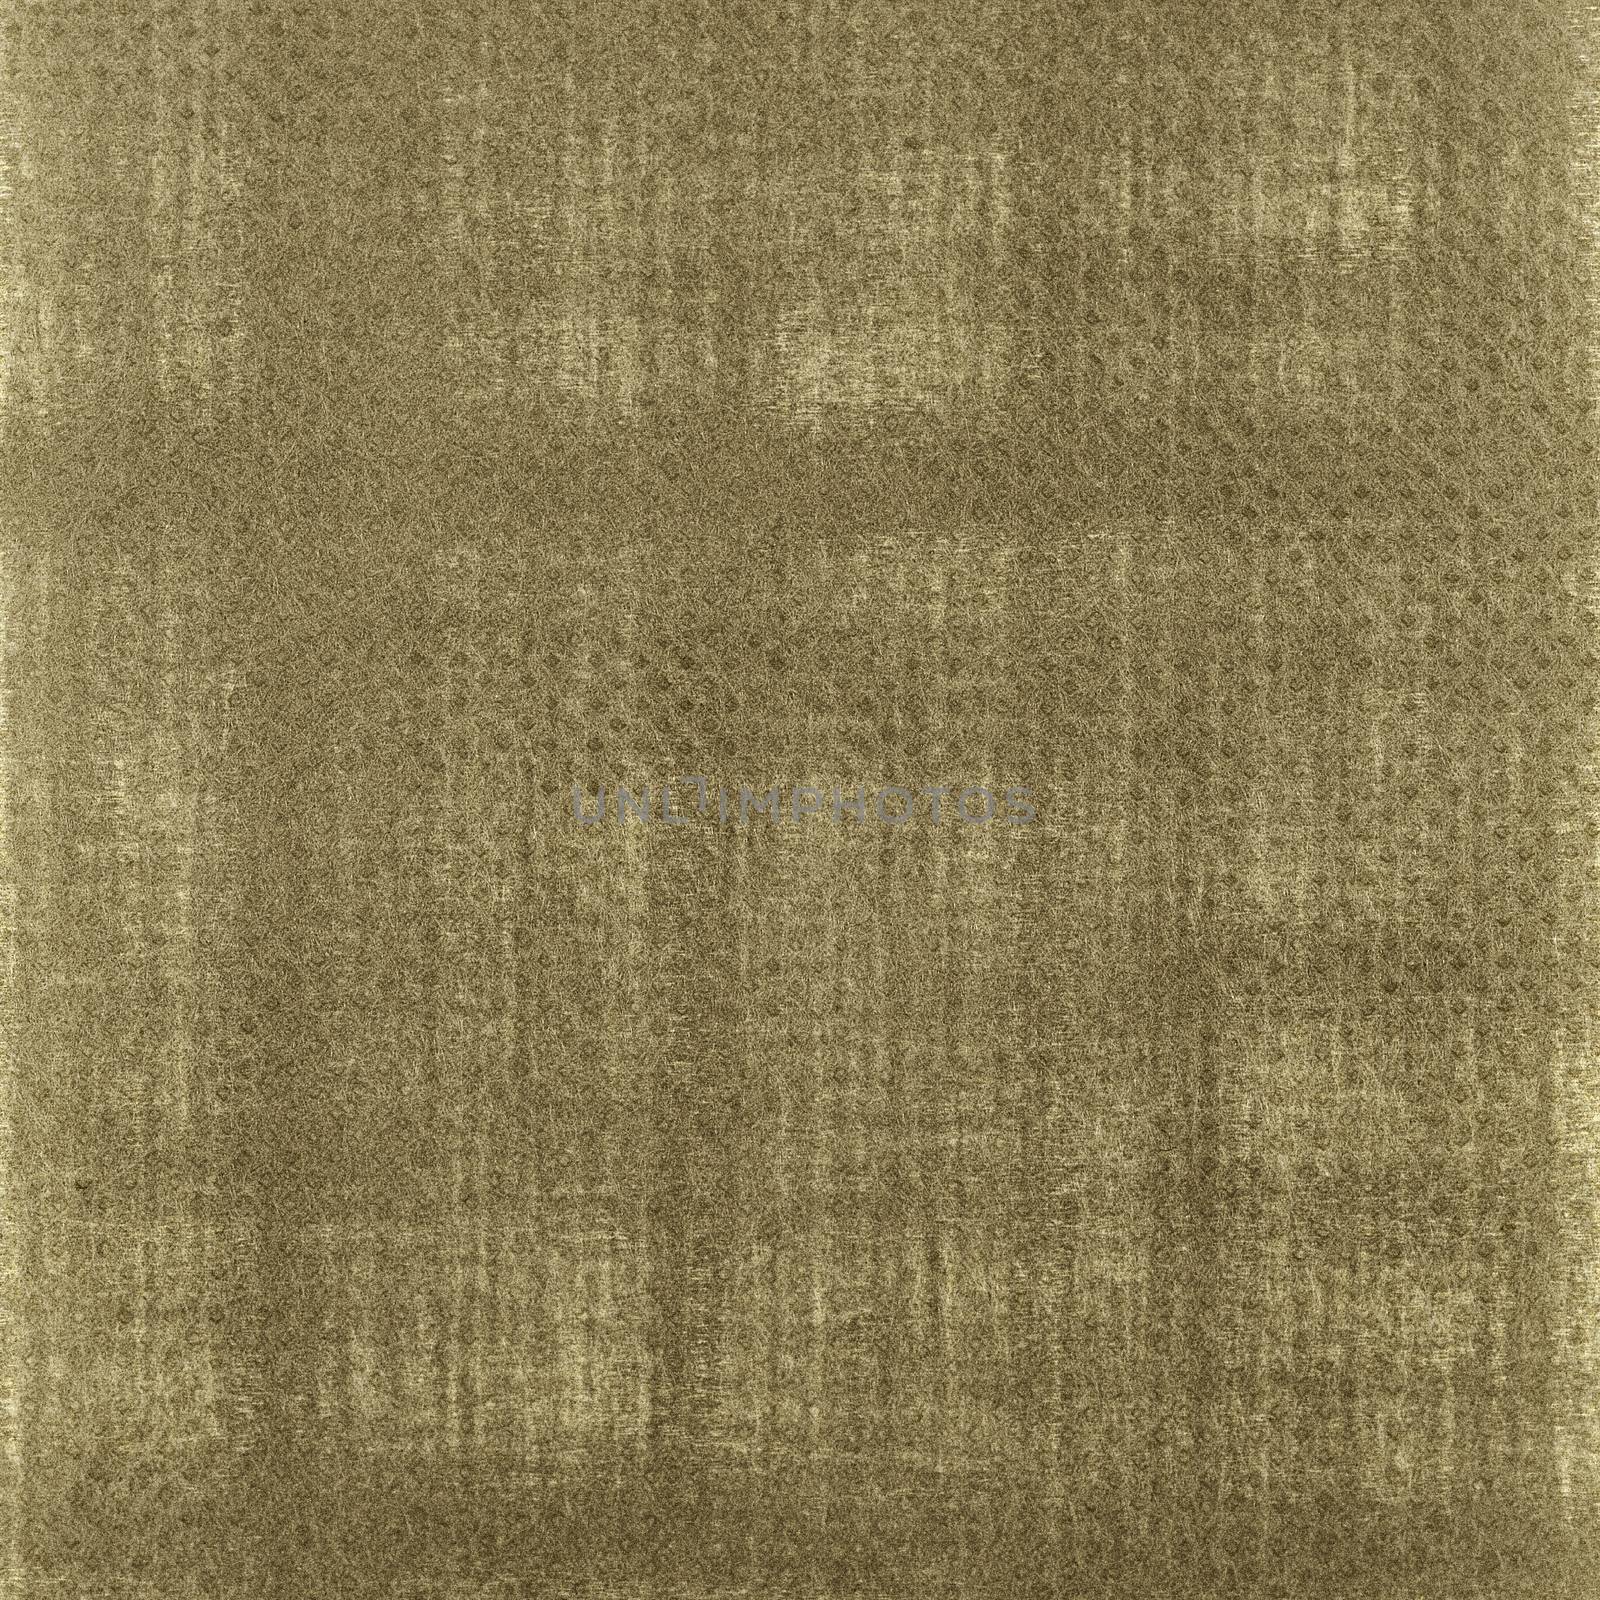 grey abstract background by panuruangjan